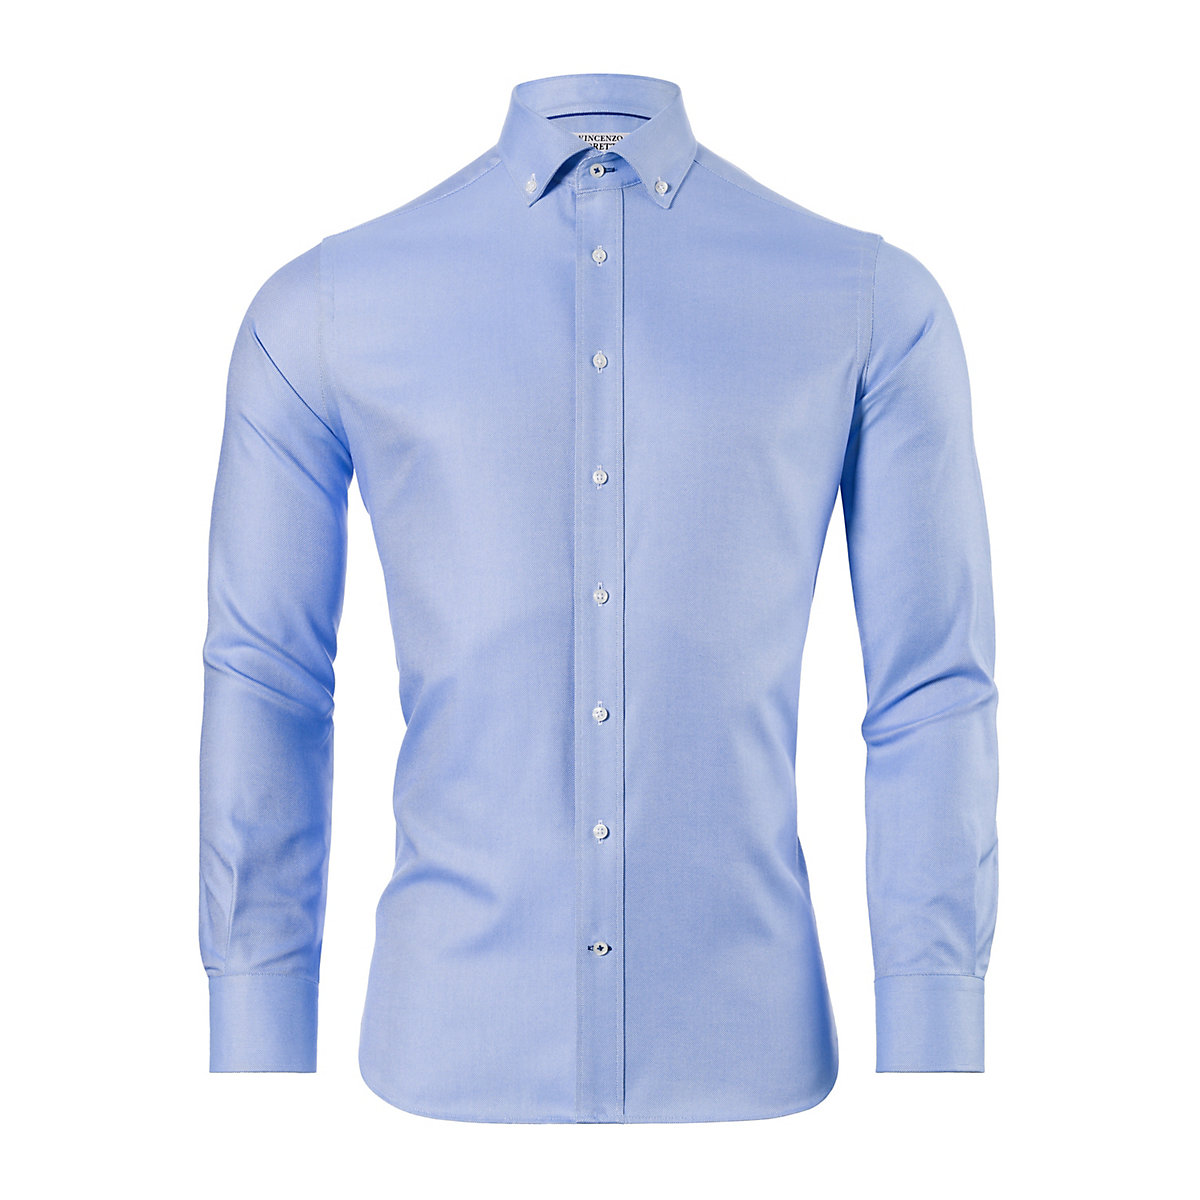 VINCENZO BORETTI Hemd tailliert bügelfrei soft Oxford hellblau